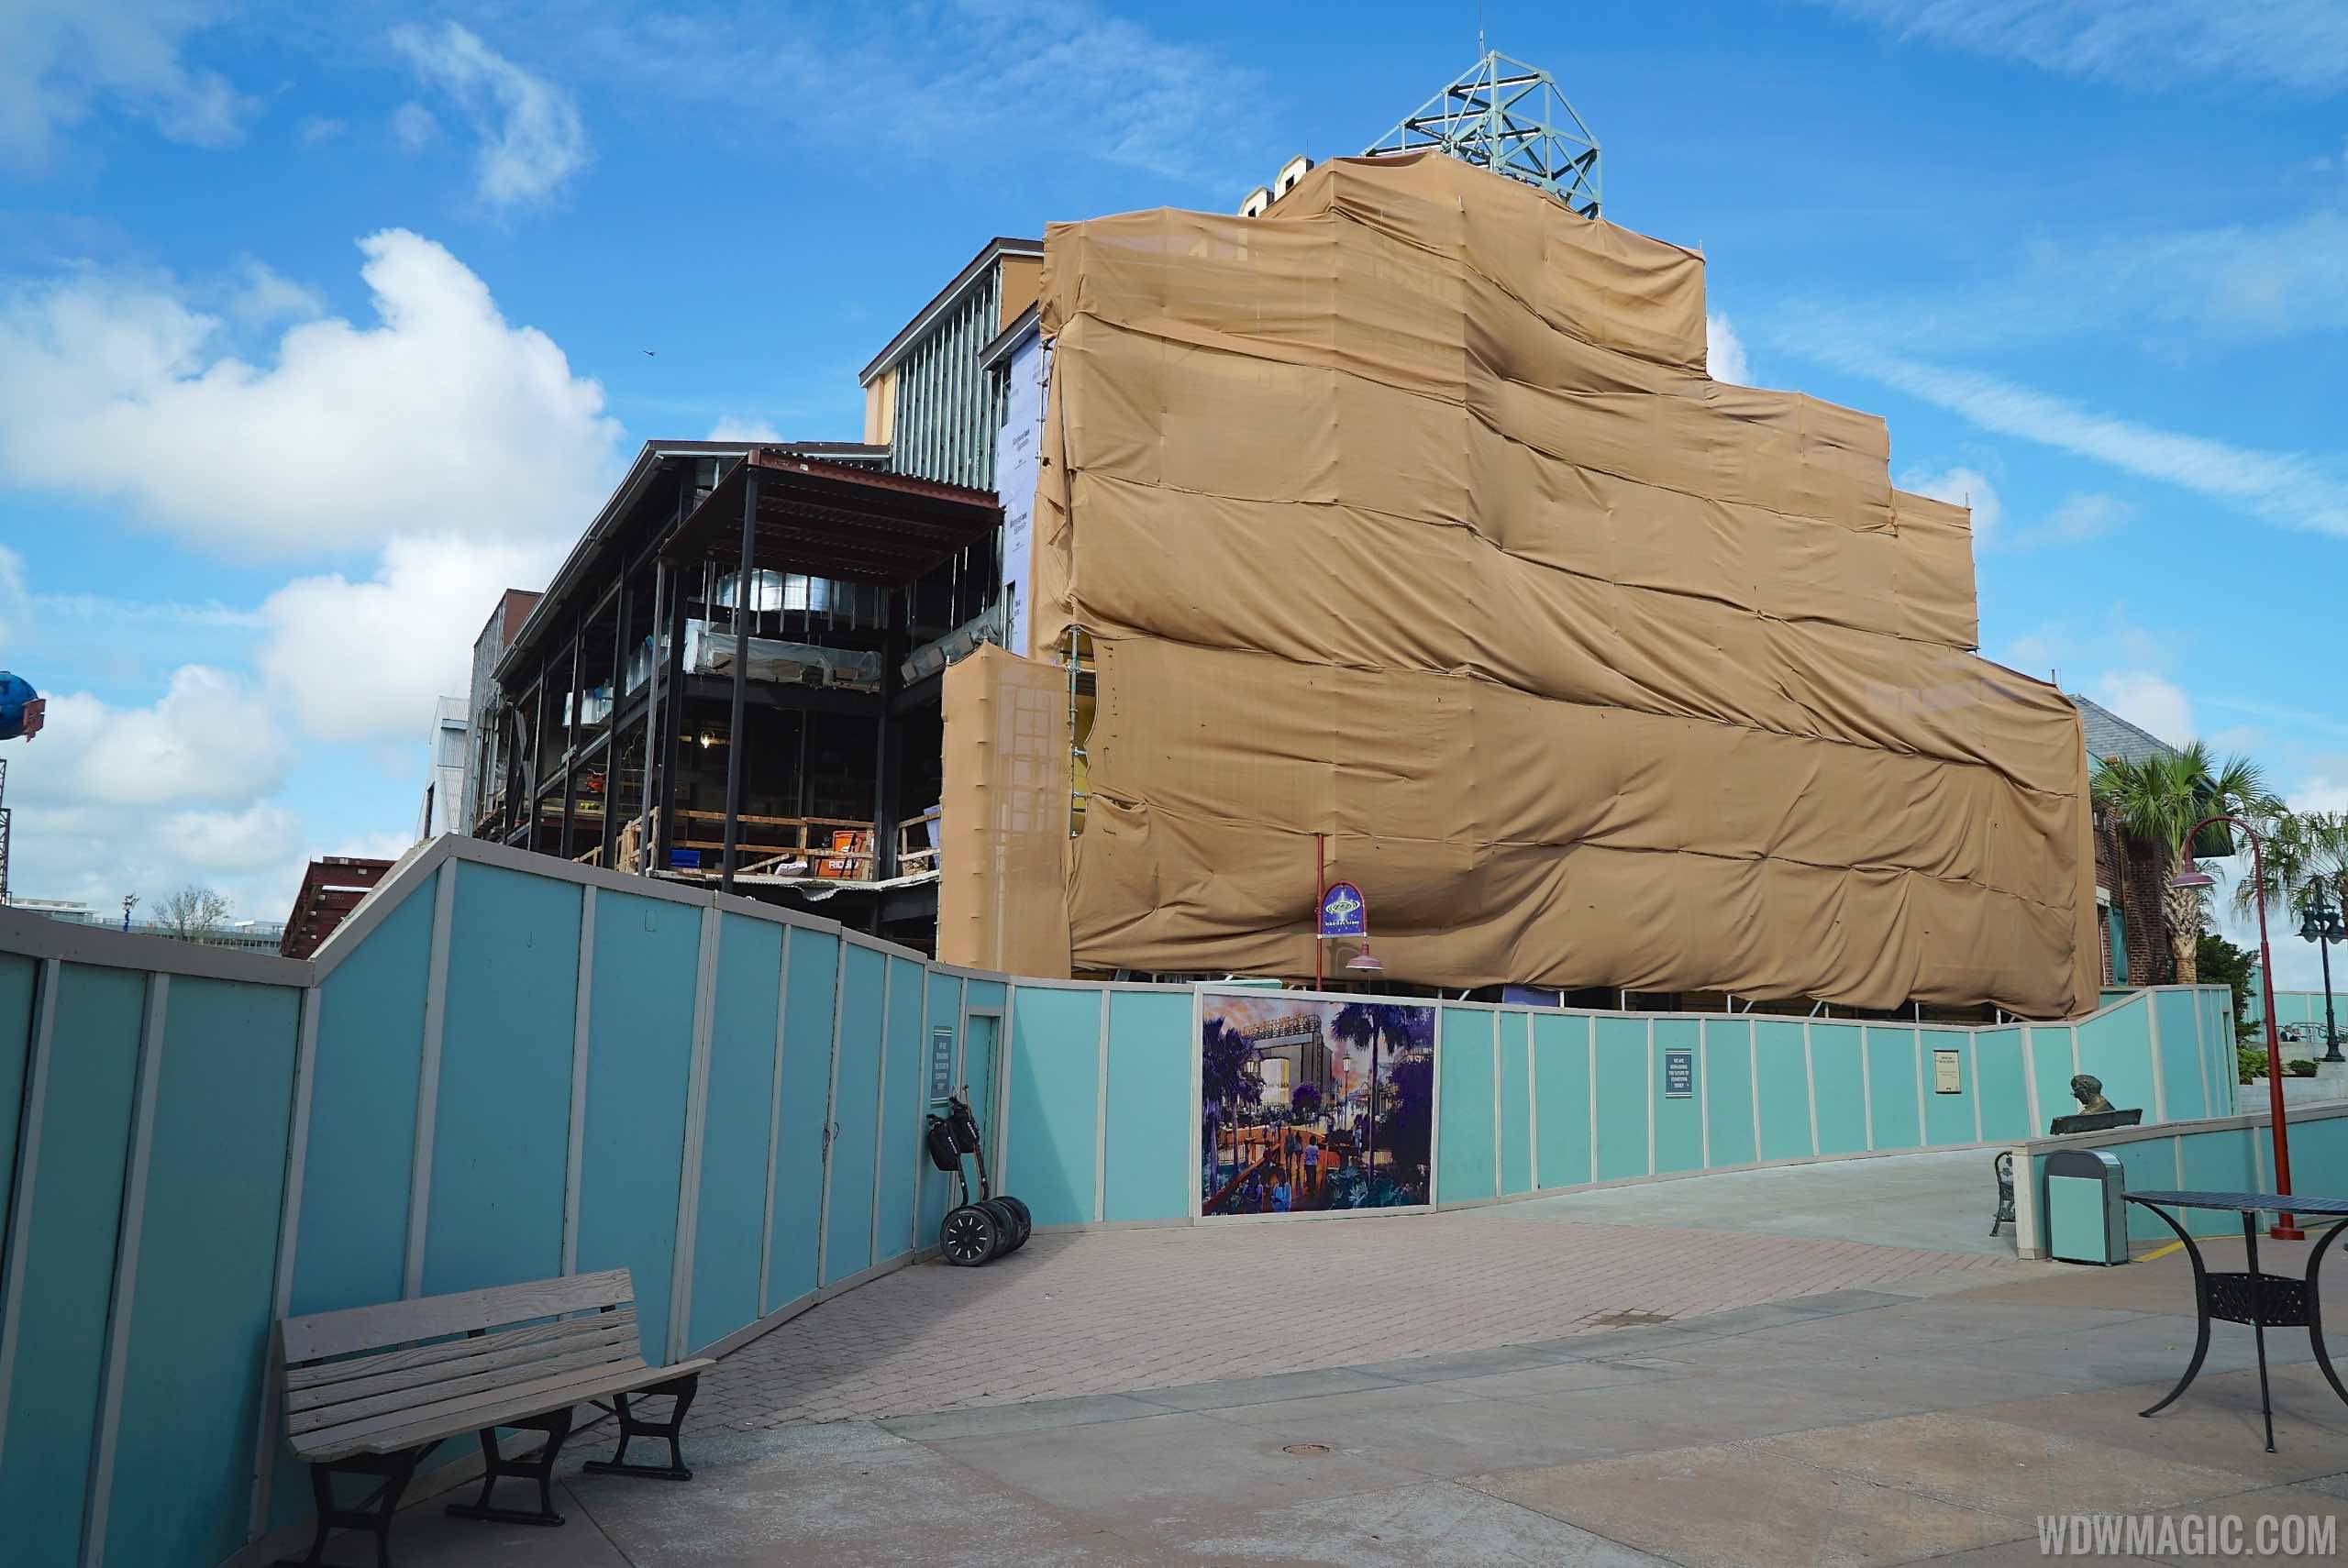 PHOTOS - Morimoto Asia construction update at Disney Springs